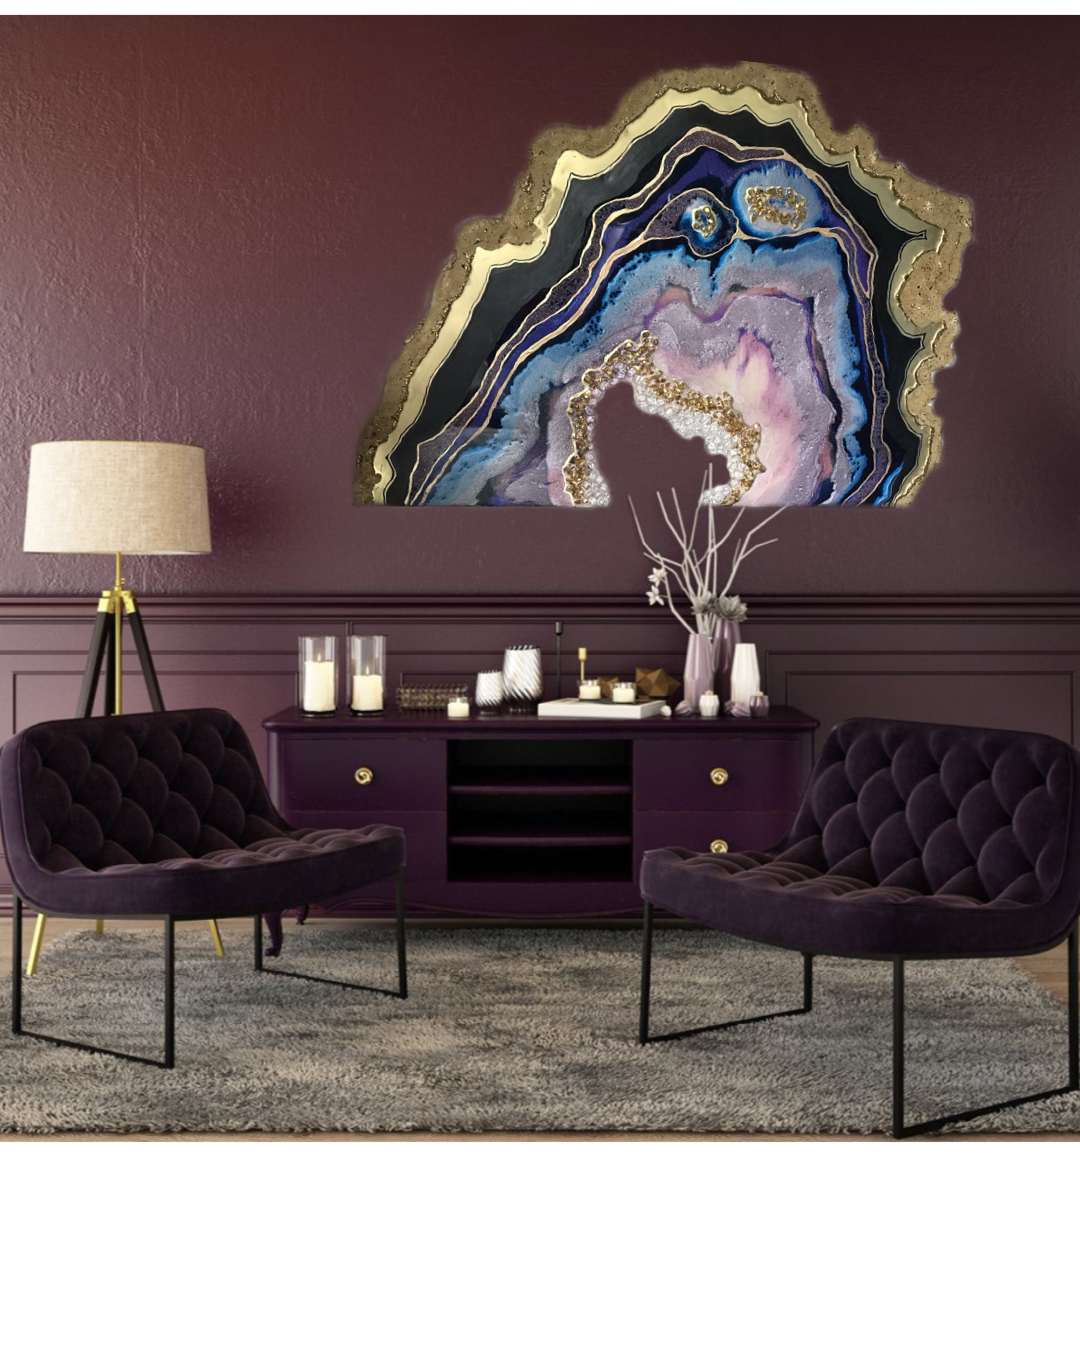 Purple and Gold amethyst geode - Custom Artwork 4 Amethyst Geode Original Artwork. COMMISSION